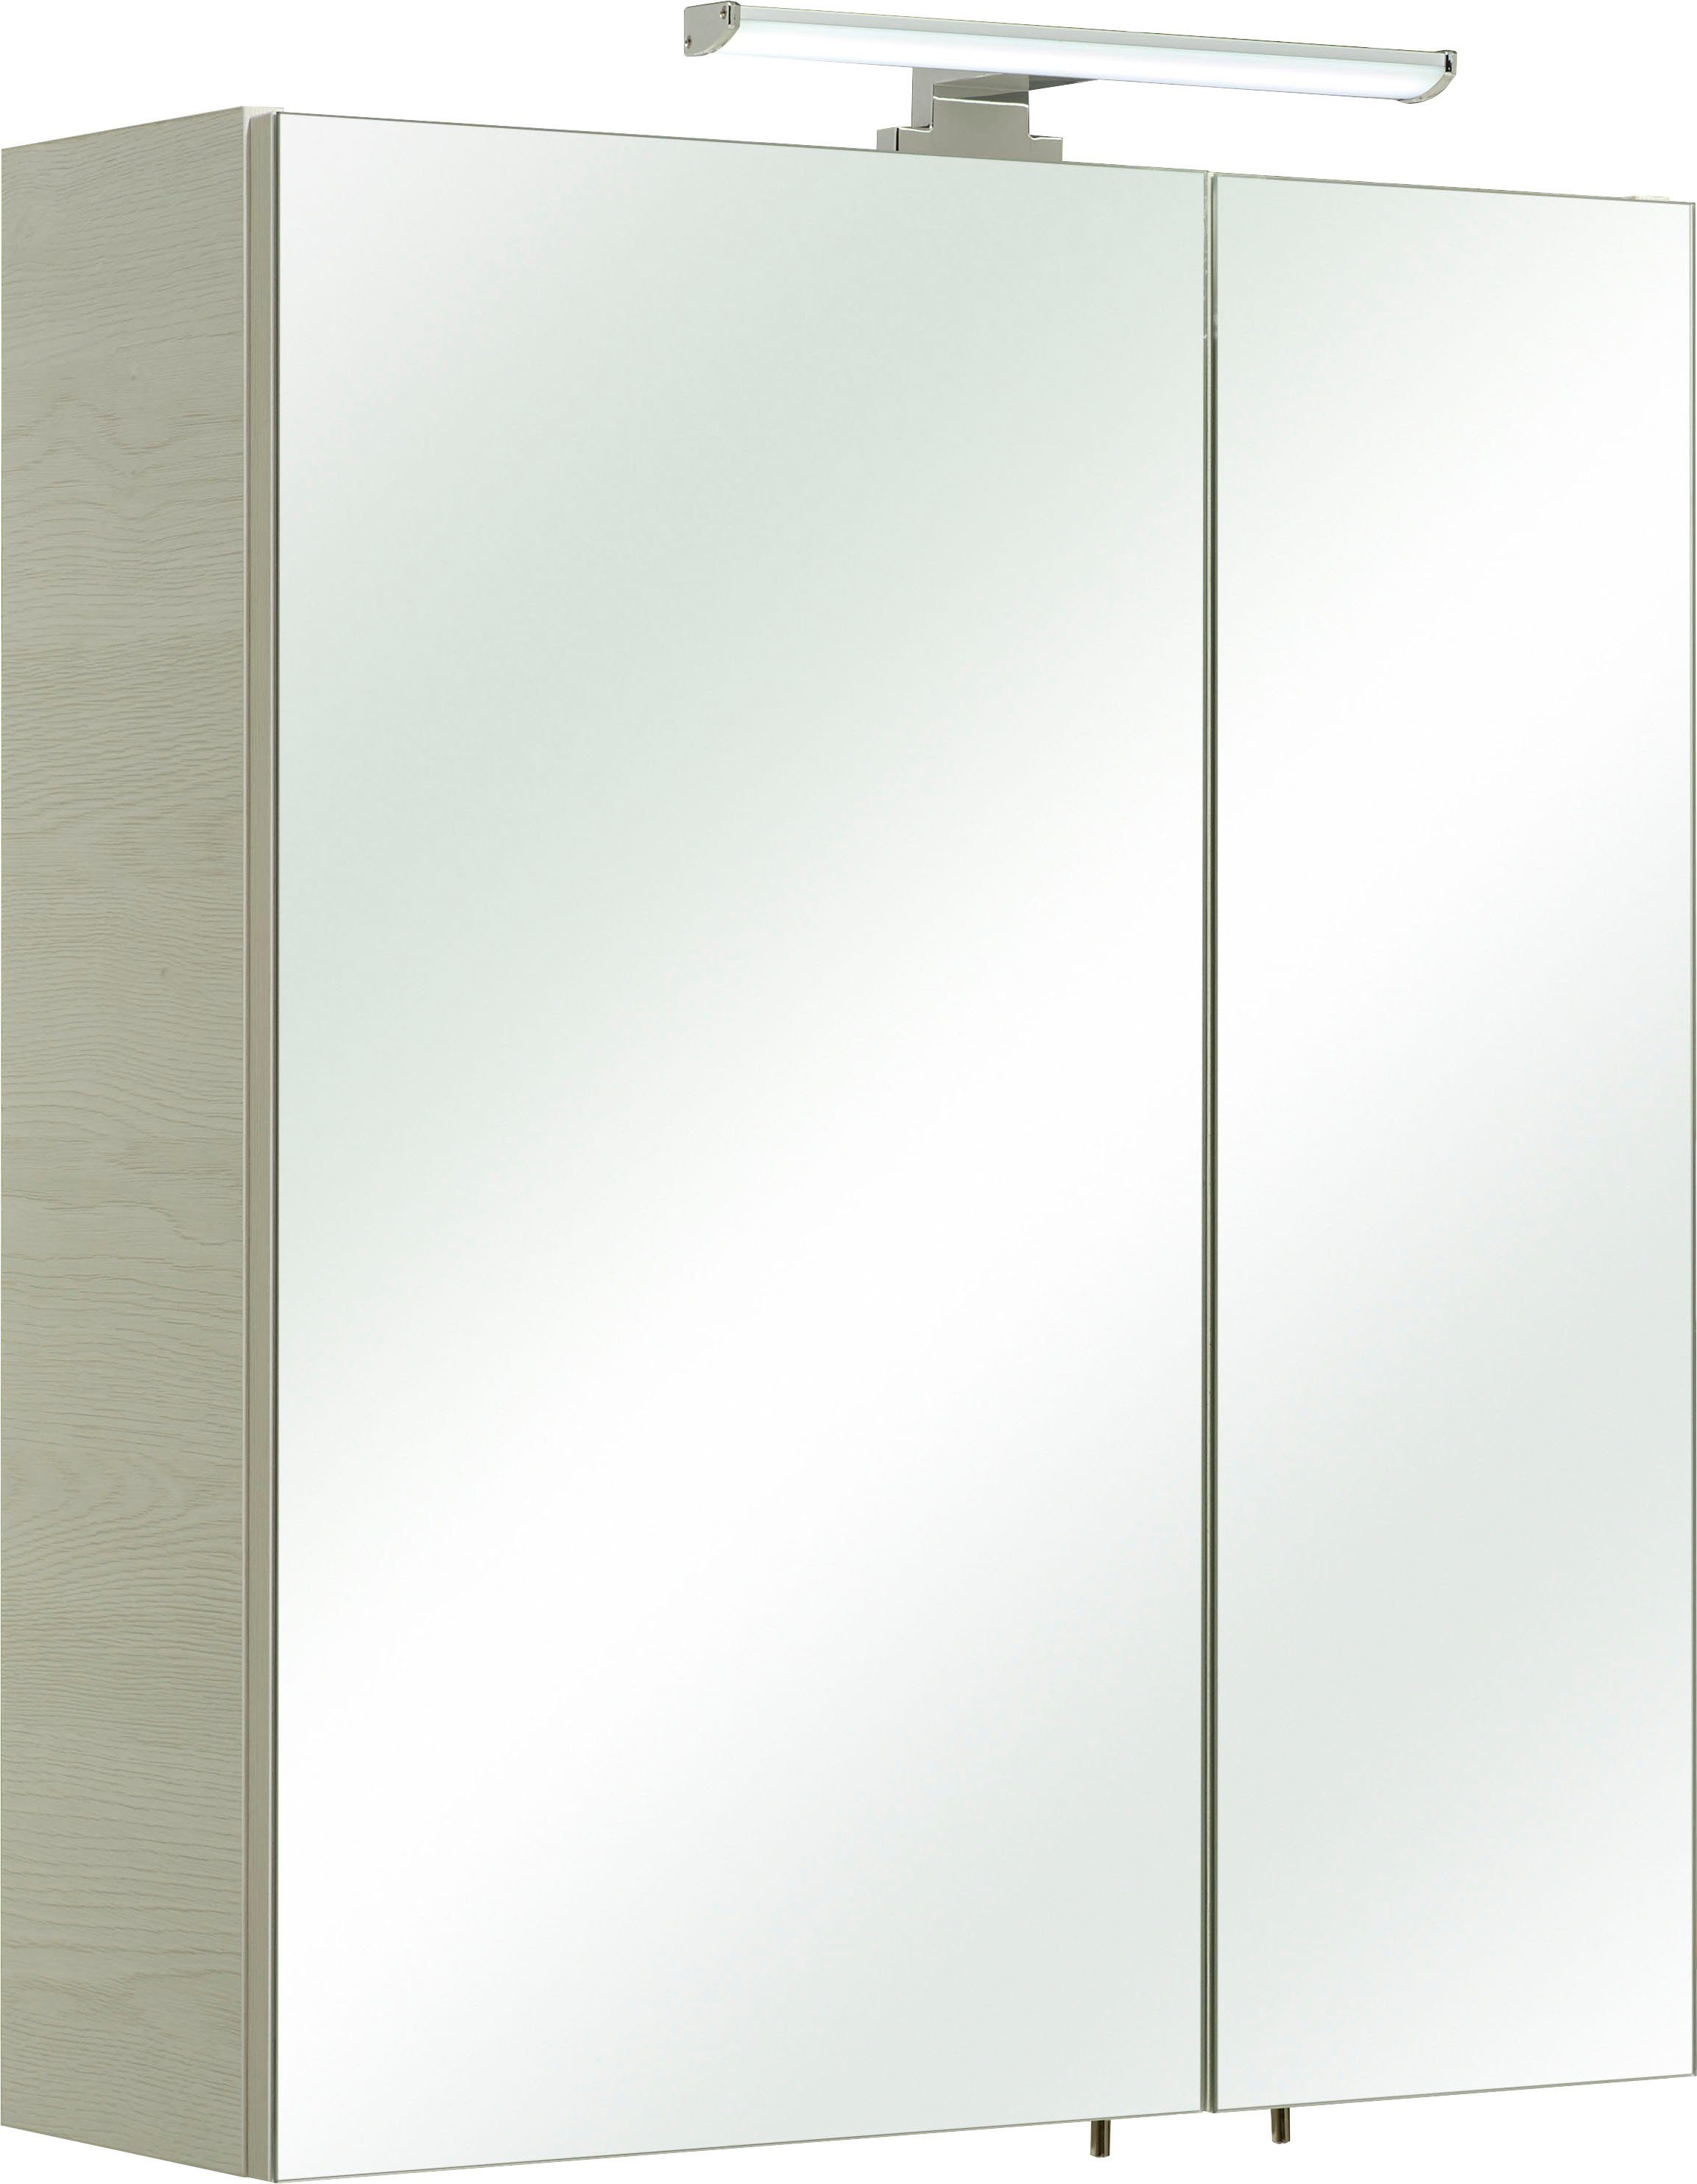 PELIPAL Spiegelschrank Breite 2-türig, LED-Beleuchtung, 936 cm, Schalter-/Steckdosenbox Quickset 60